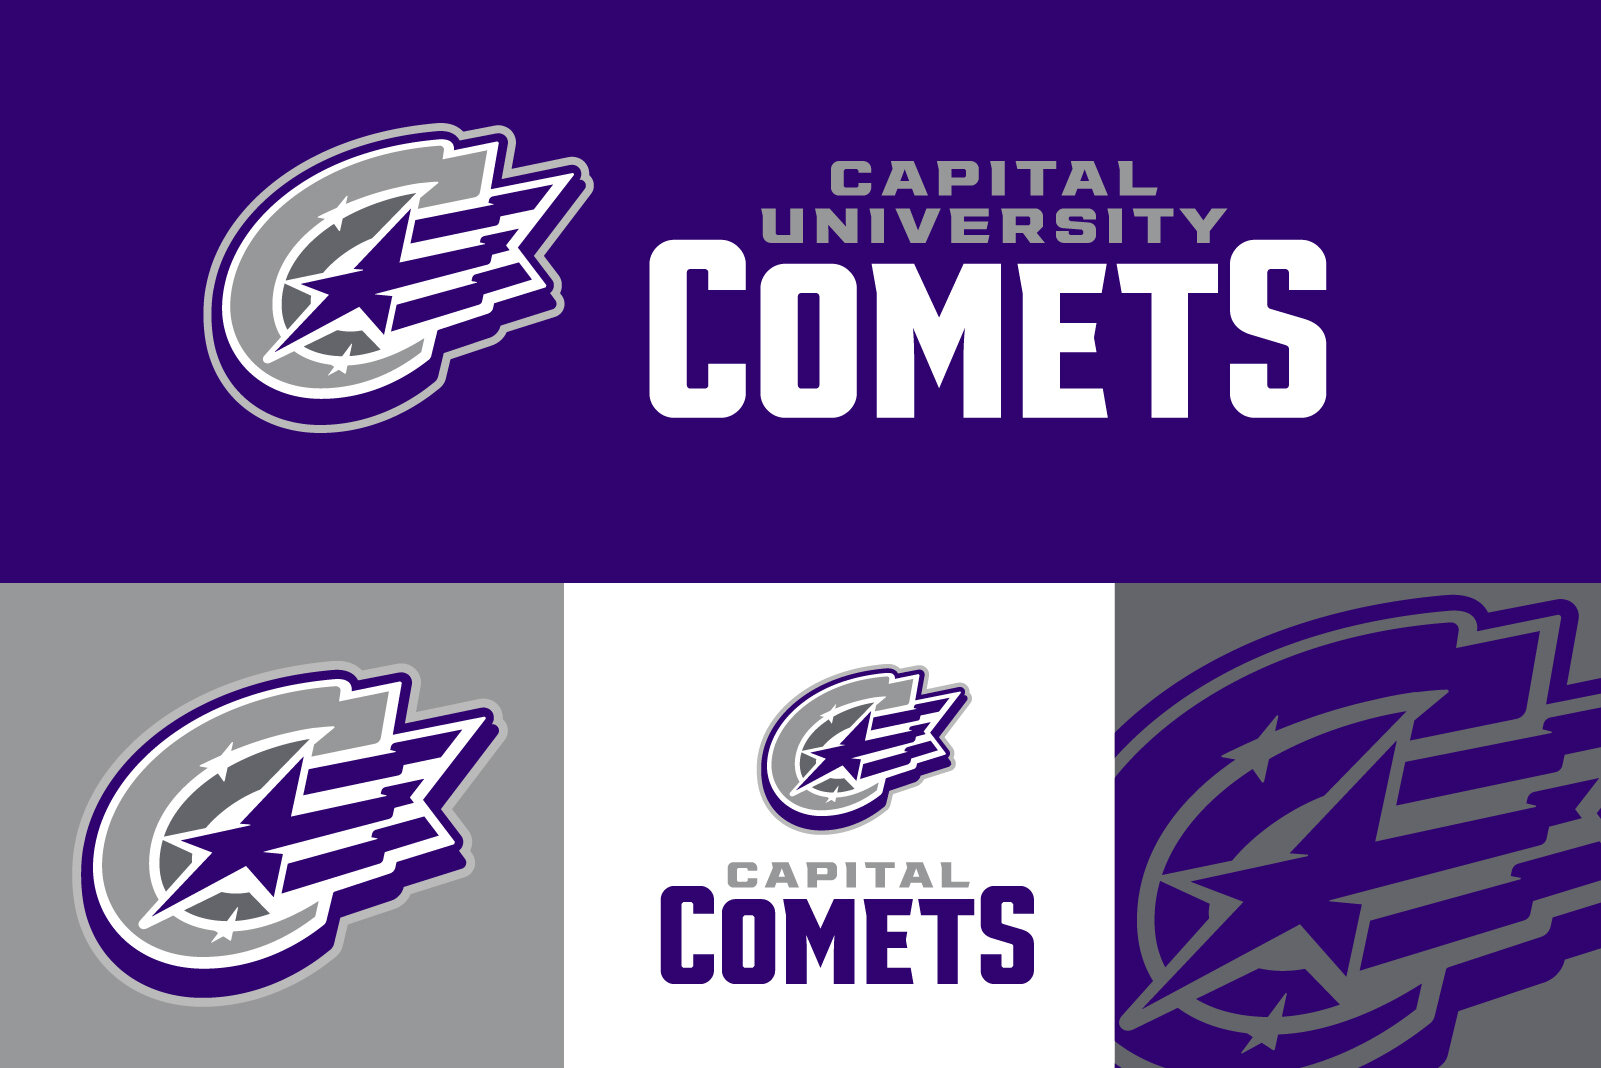 Capital comets logo_website copy.jpg